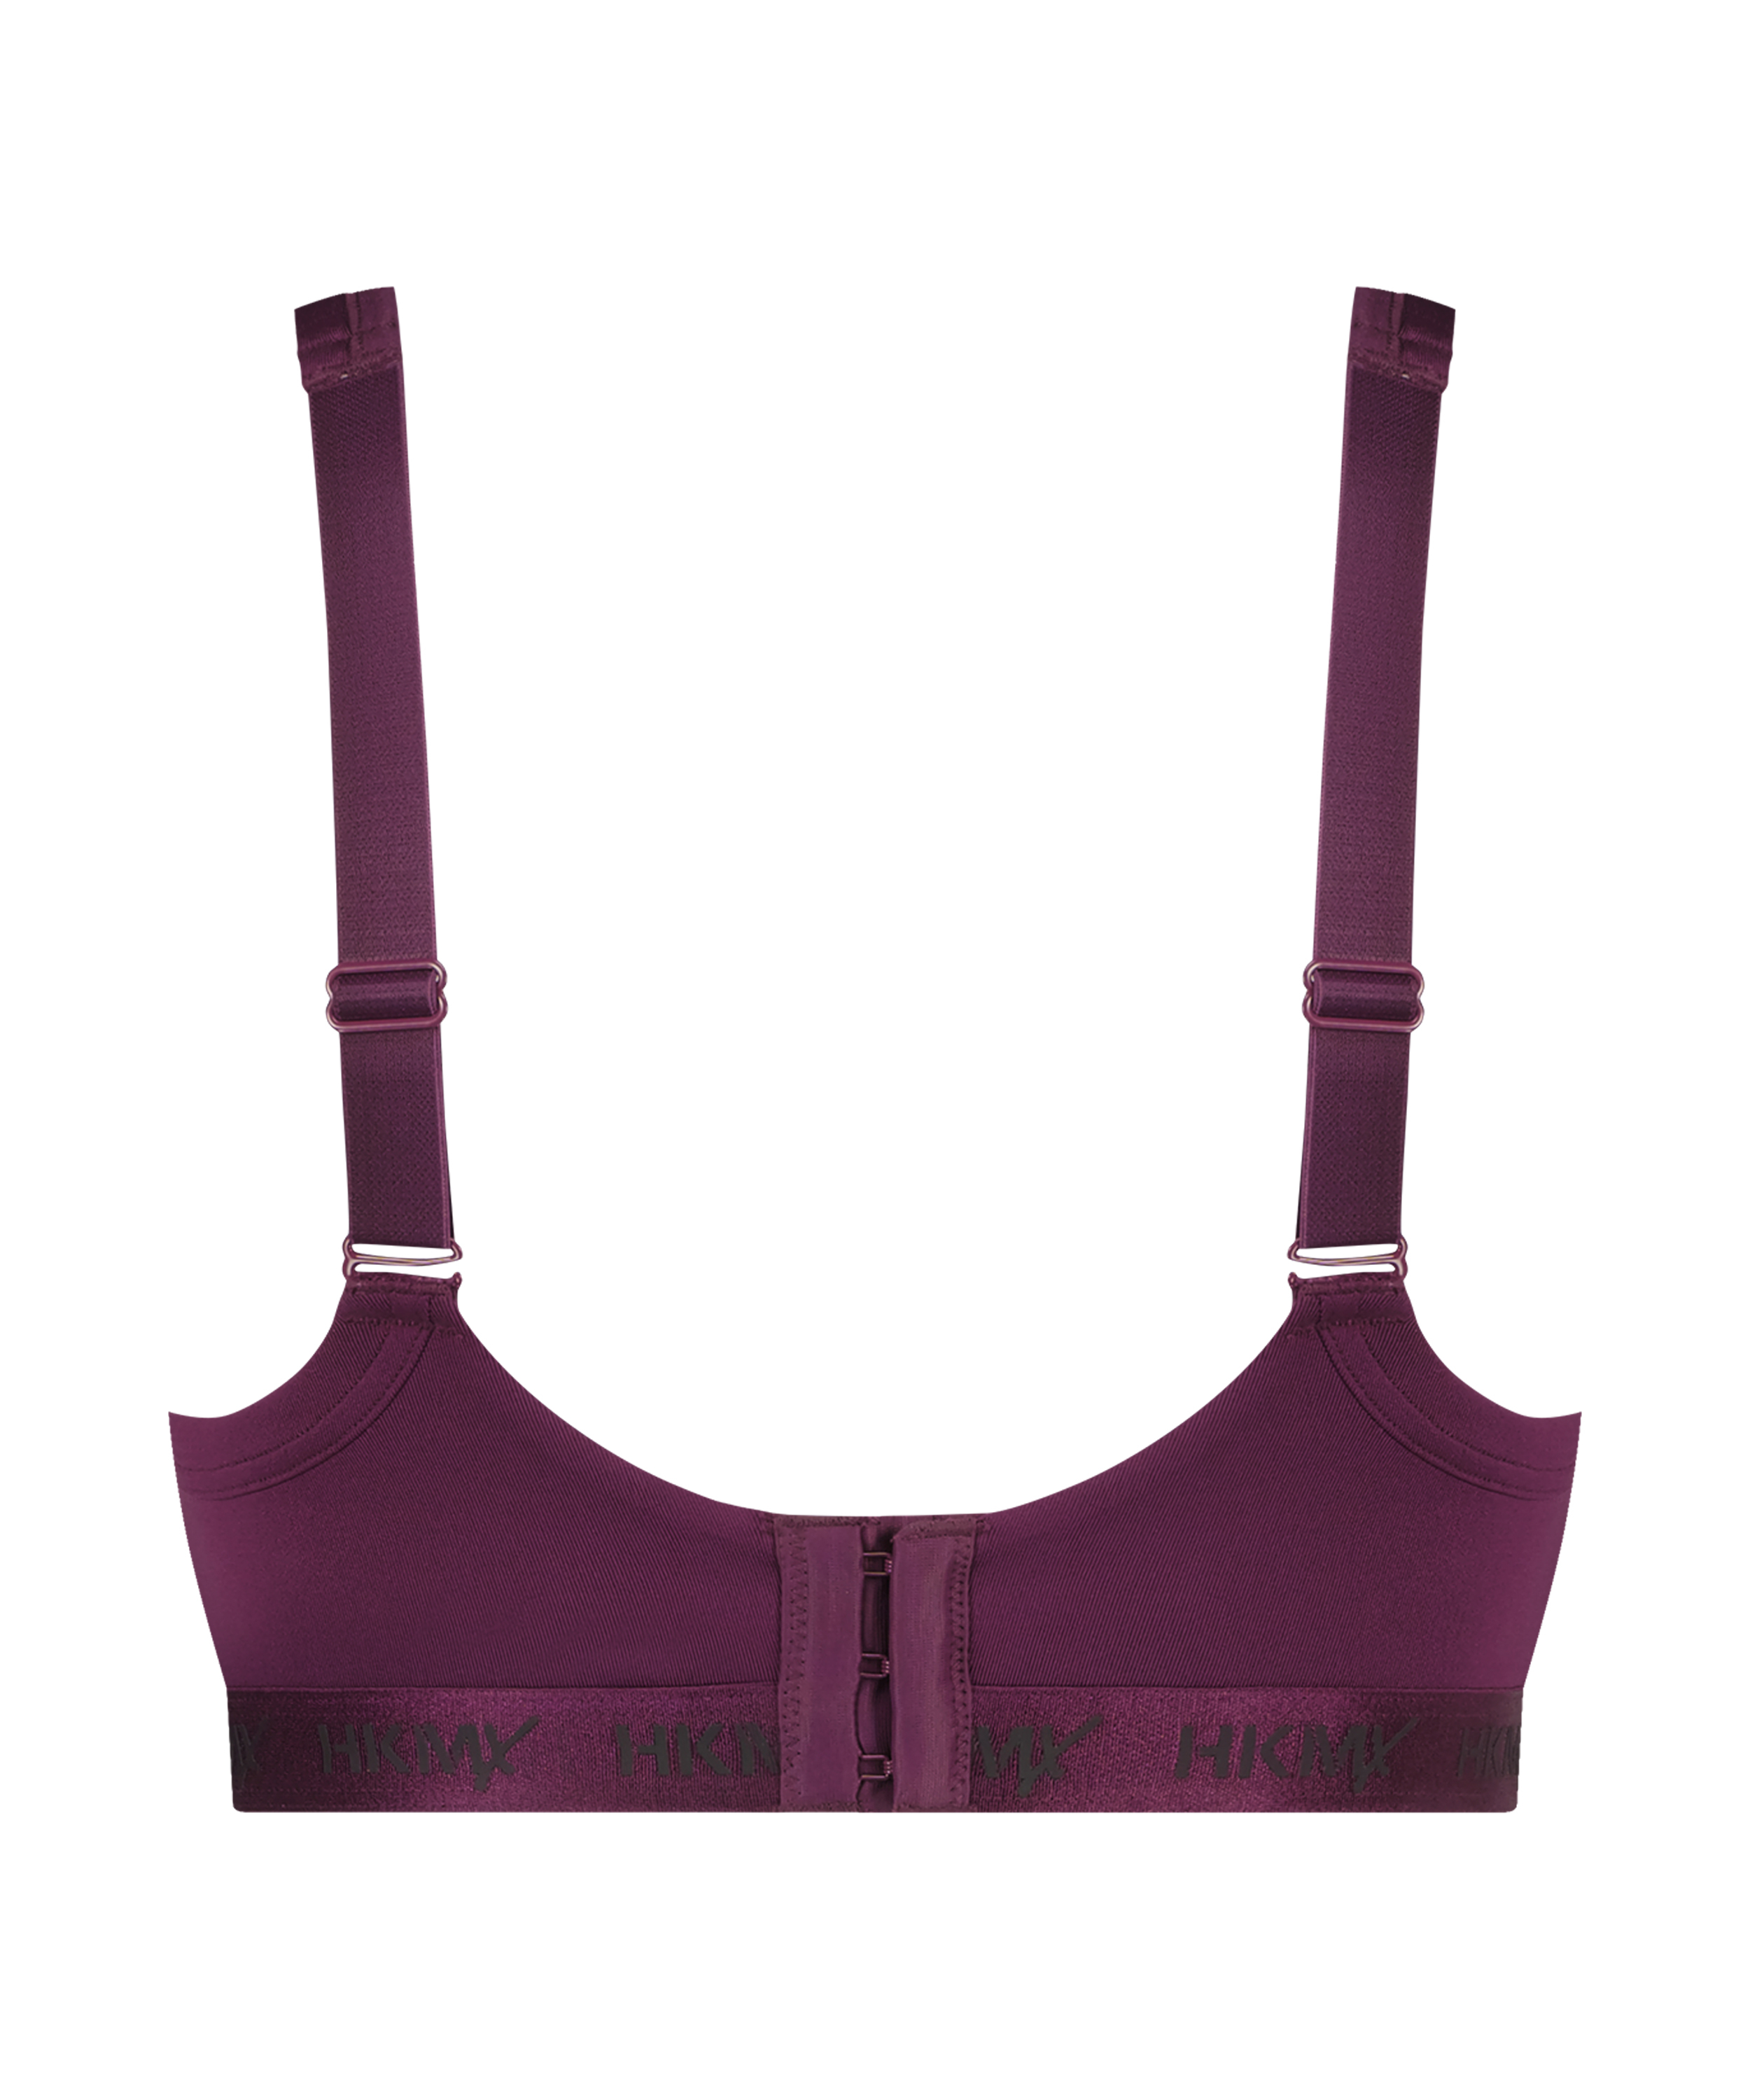 HKMX Sports bra The Elite Level 3, Purple, main